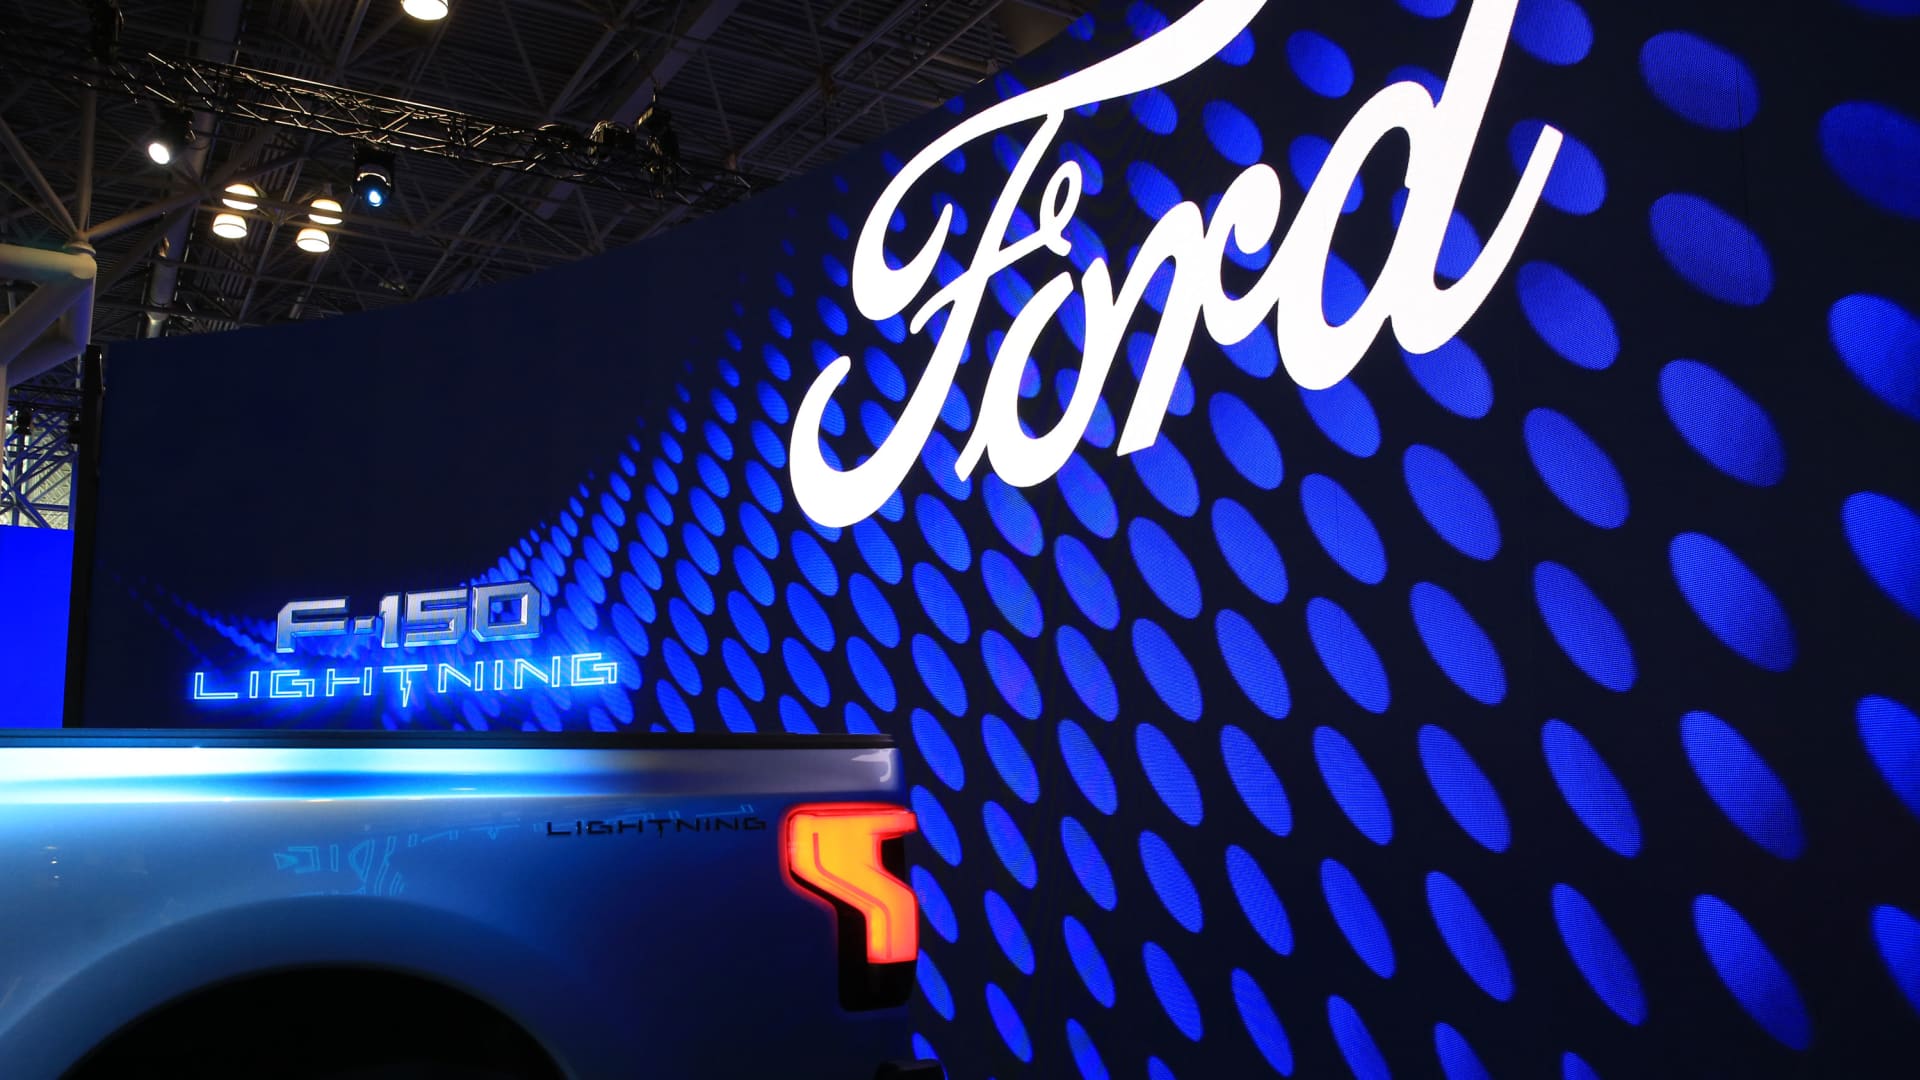 Ford's sales up 16% in third quarter, despite September decline - CNBC